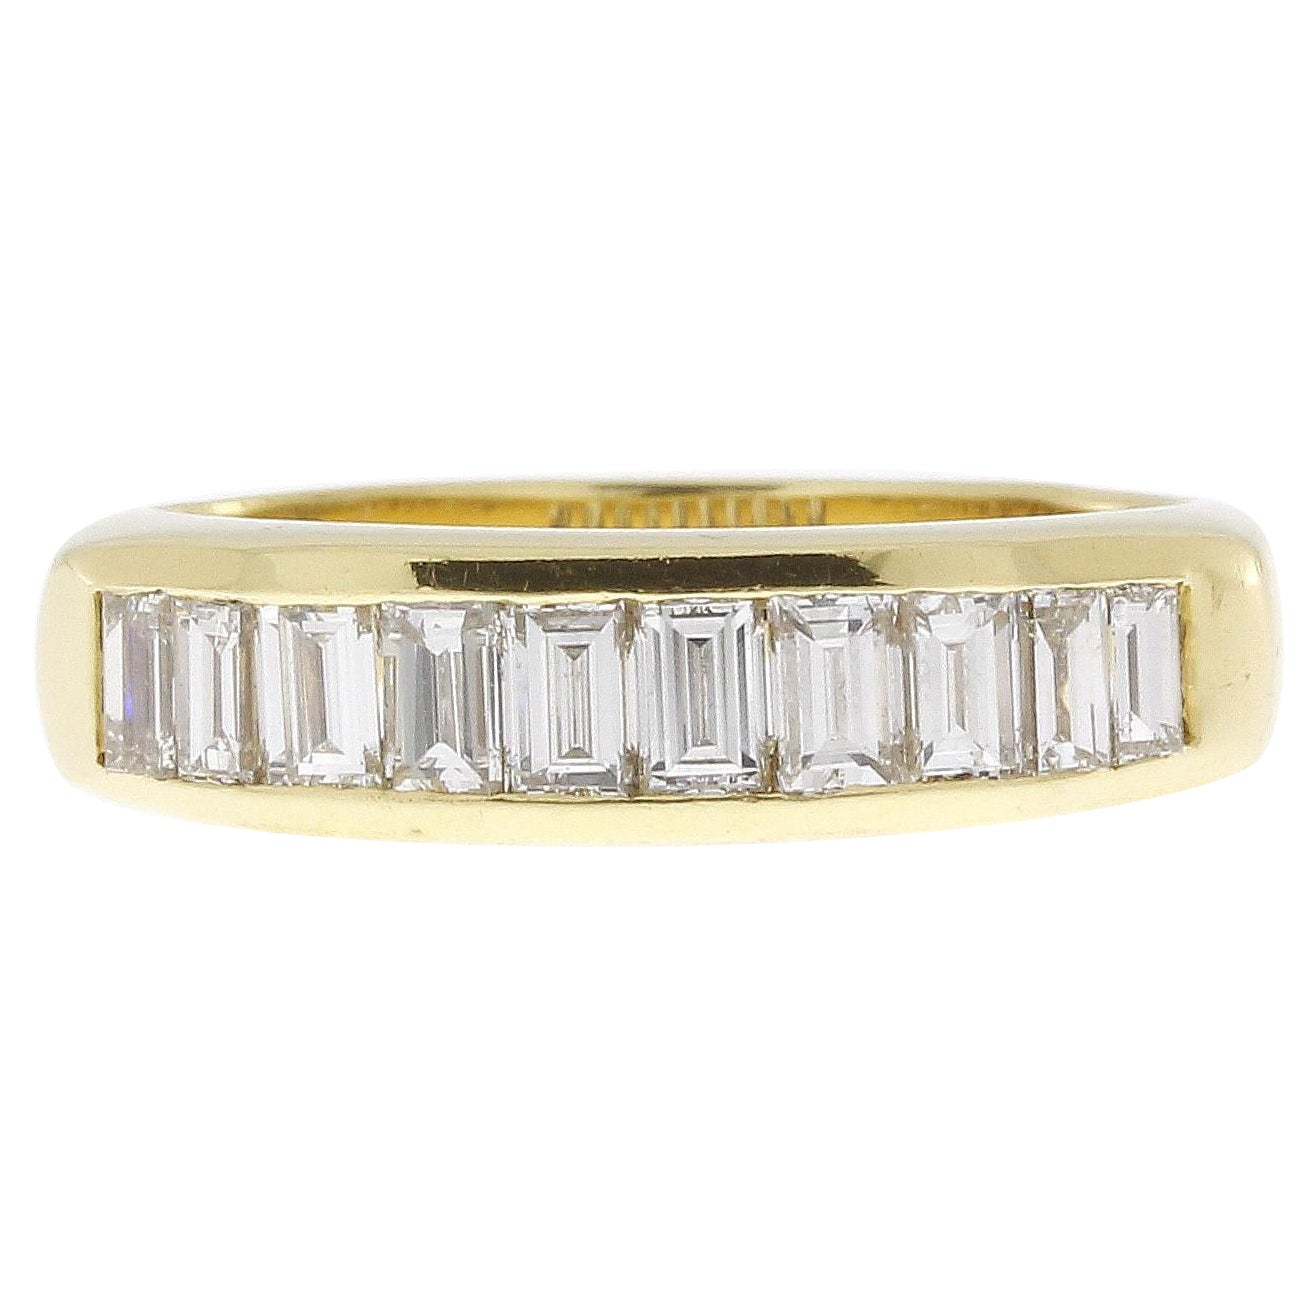 Vintage 1.5 Carat Baguette Diamond Ring